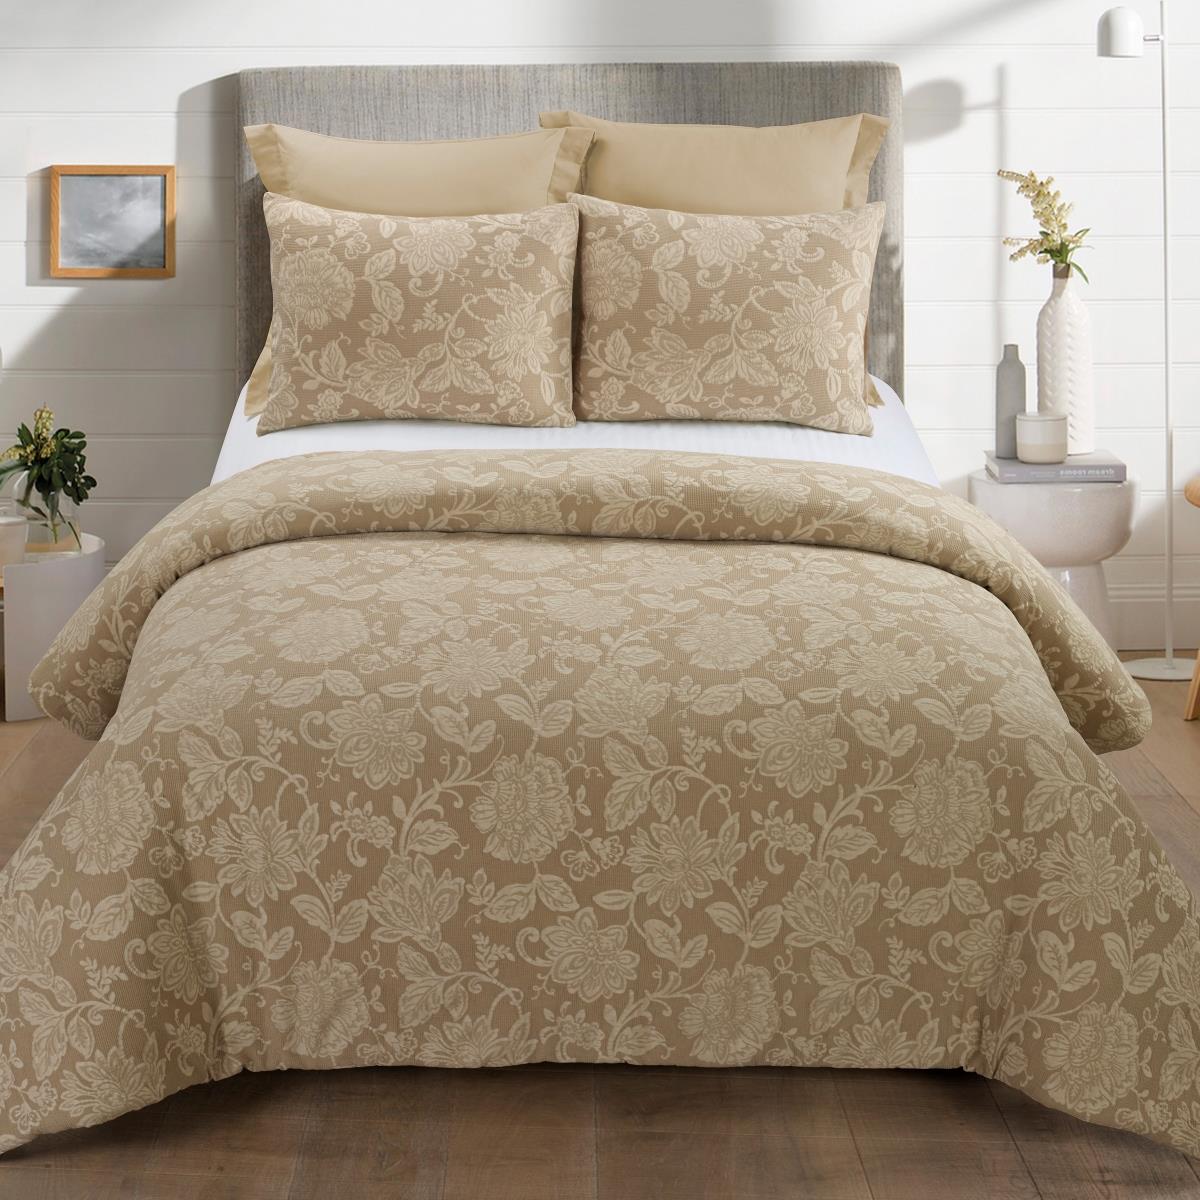 Y00402 Queen Size Comforter Set - Amadora Cappuccino